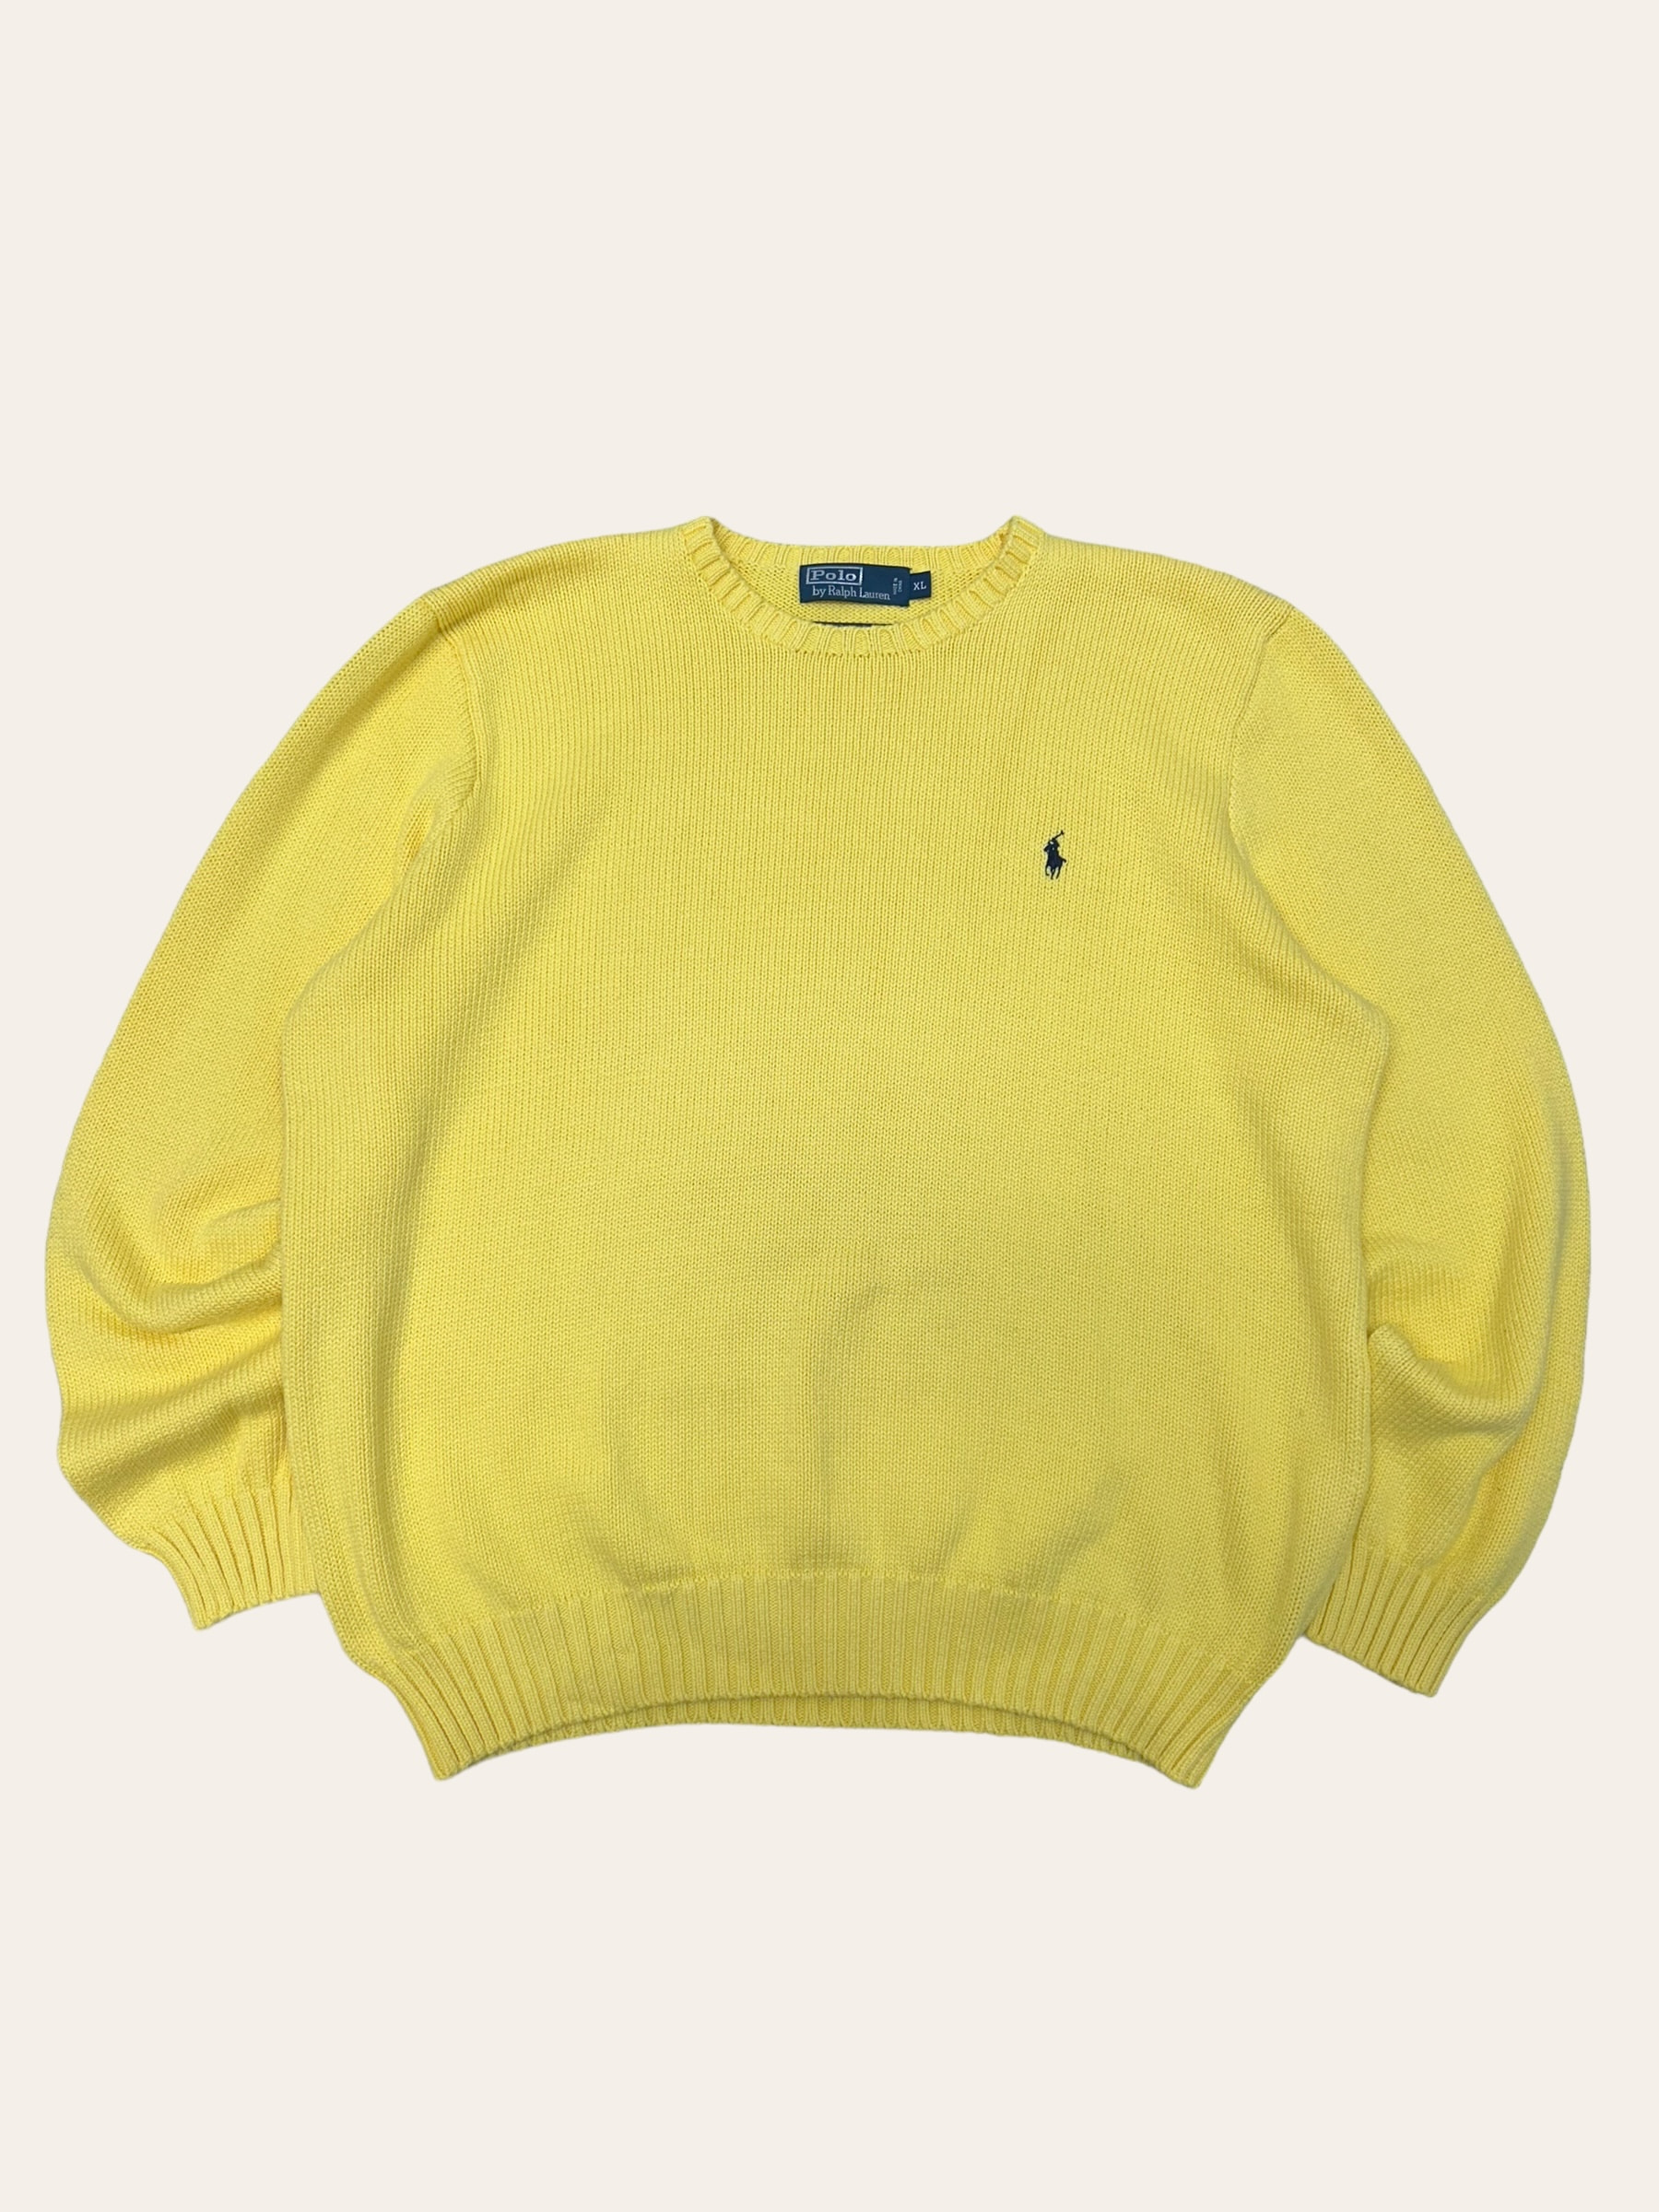 Polo ralph lauren yellow cotton sweater XL